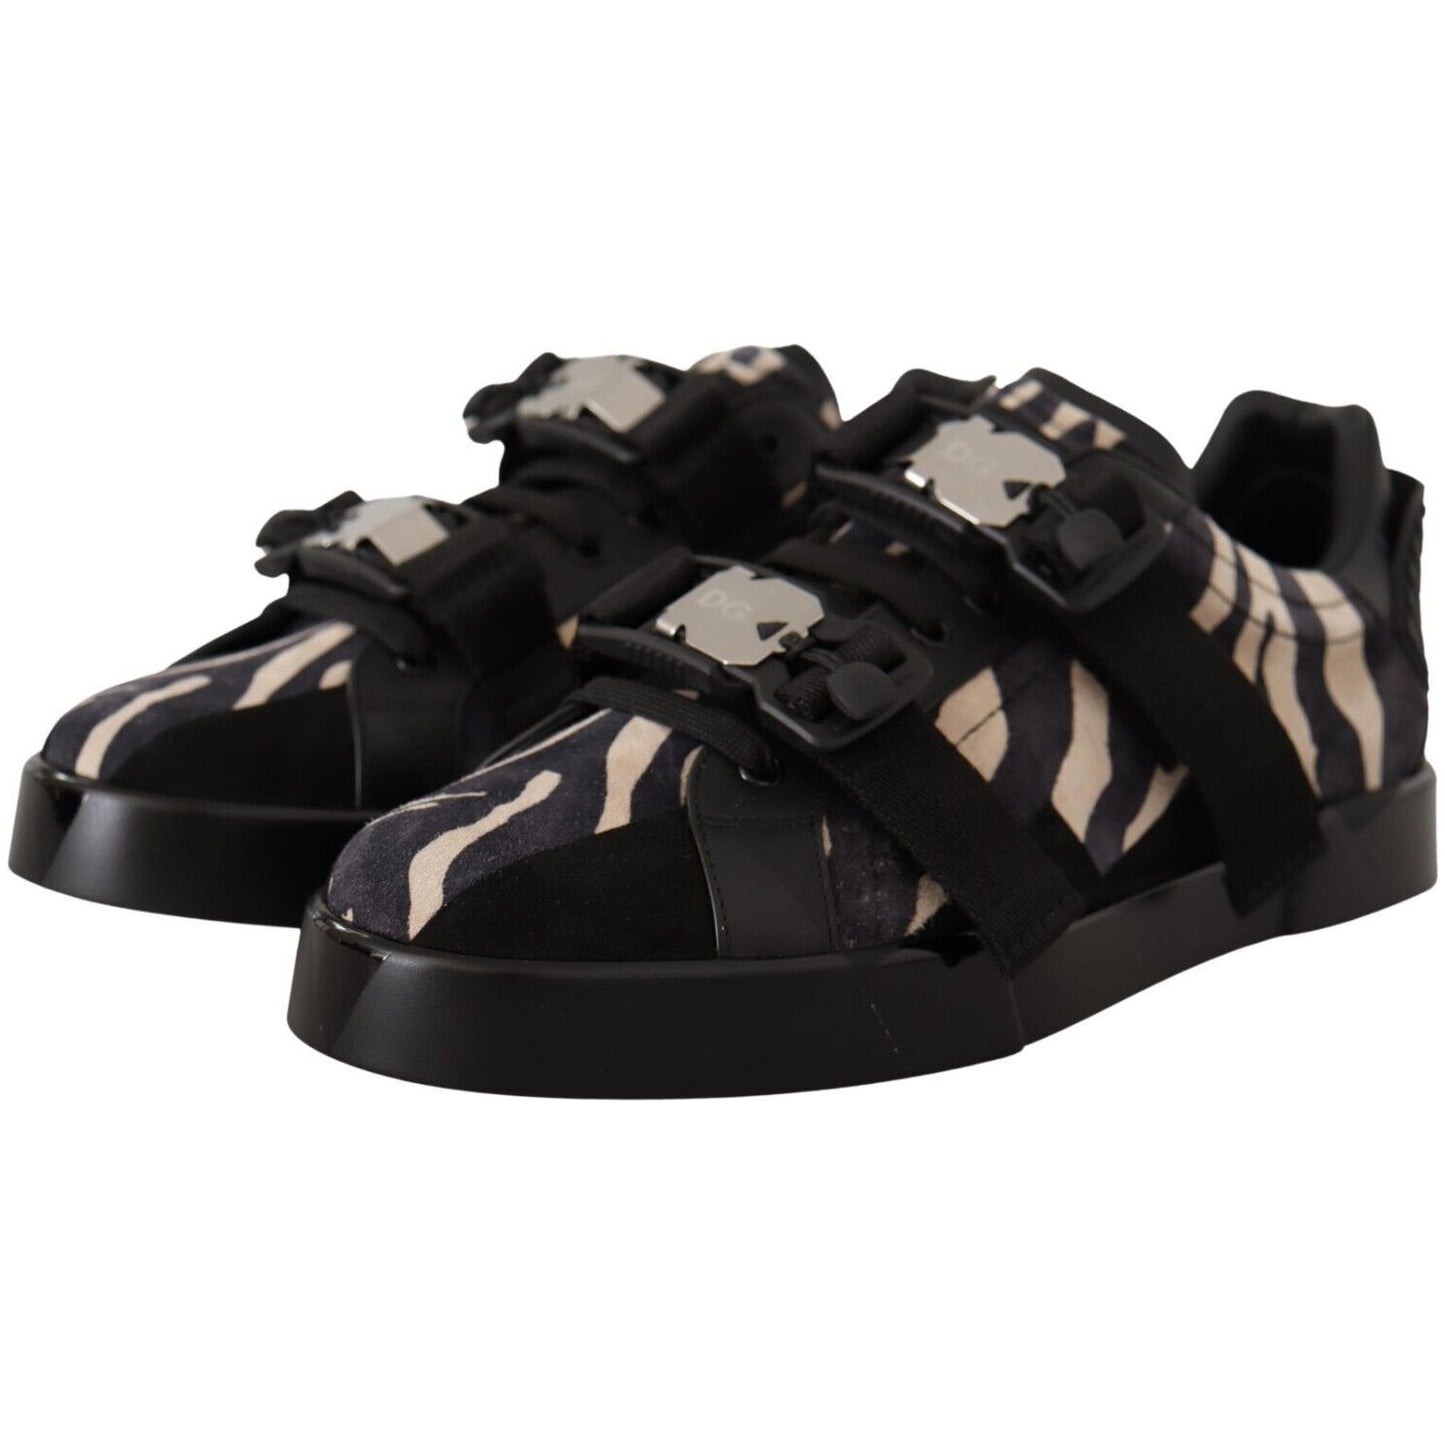 Dolce & Gabbana Zebra Suede Low Top Fashion Sneakers MAN SNEAKERS black-white-zebra-suede-rubber-sneakers-shoes-2